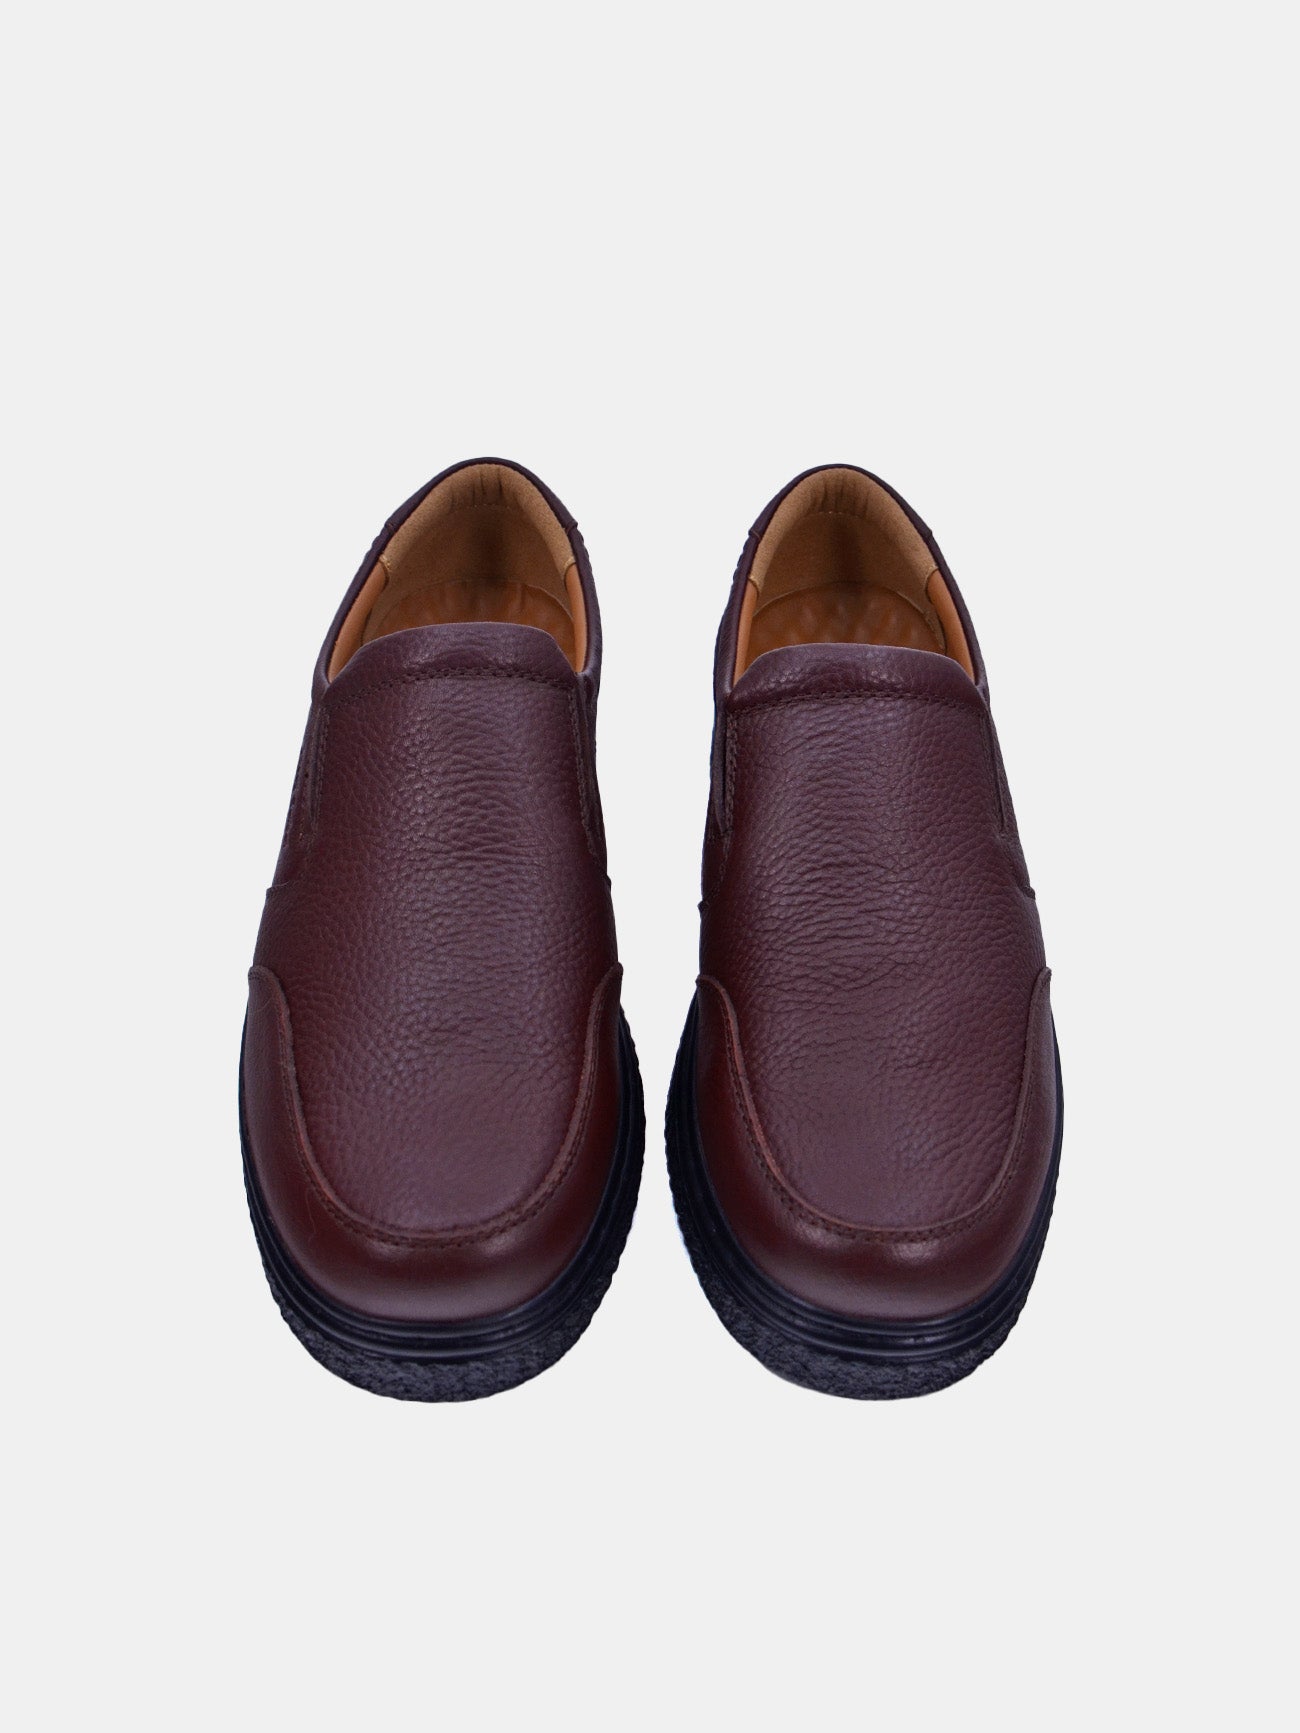 Josef Seibel 6198-5 Men's Slip On Shoes